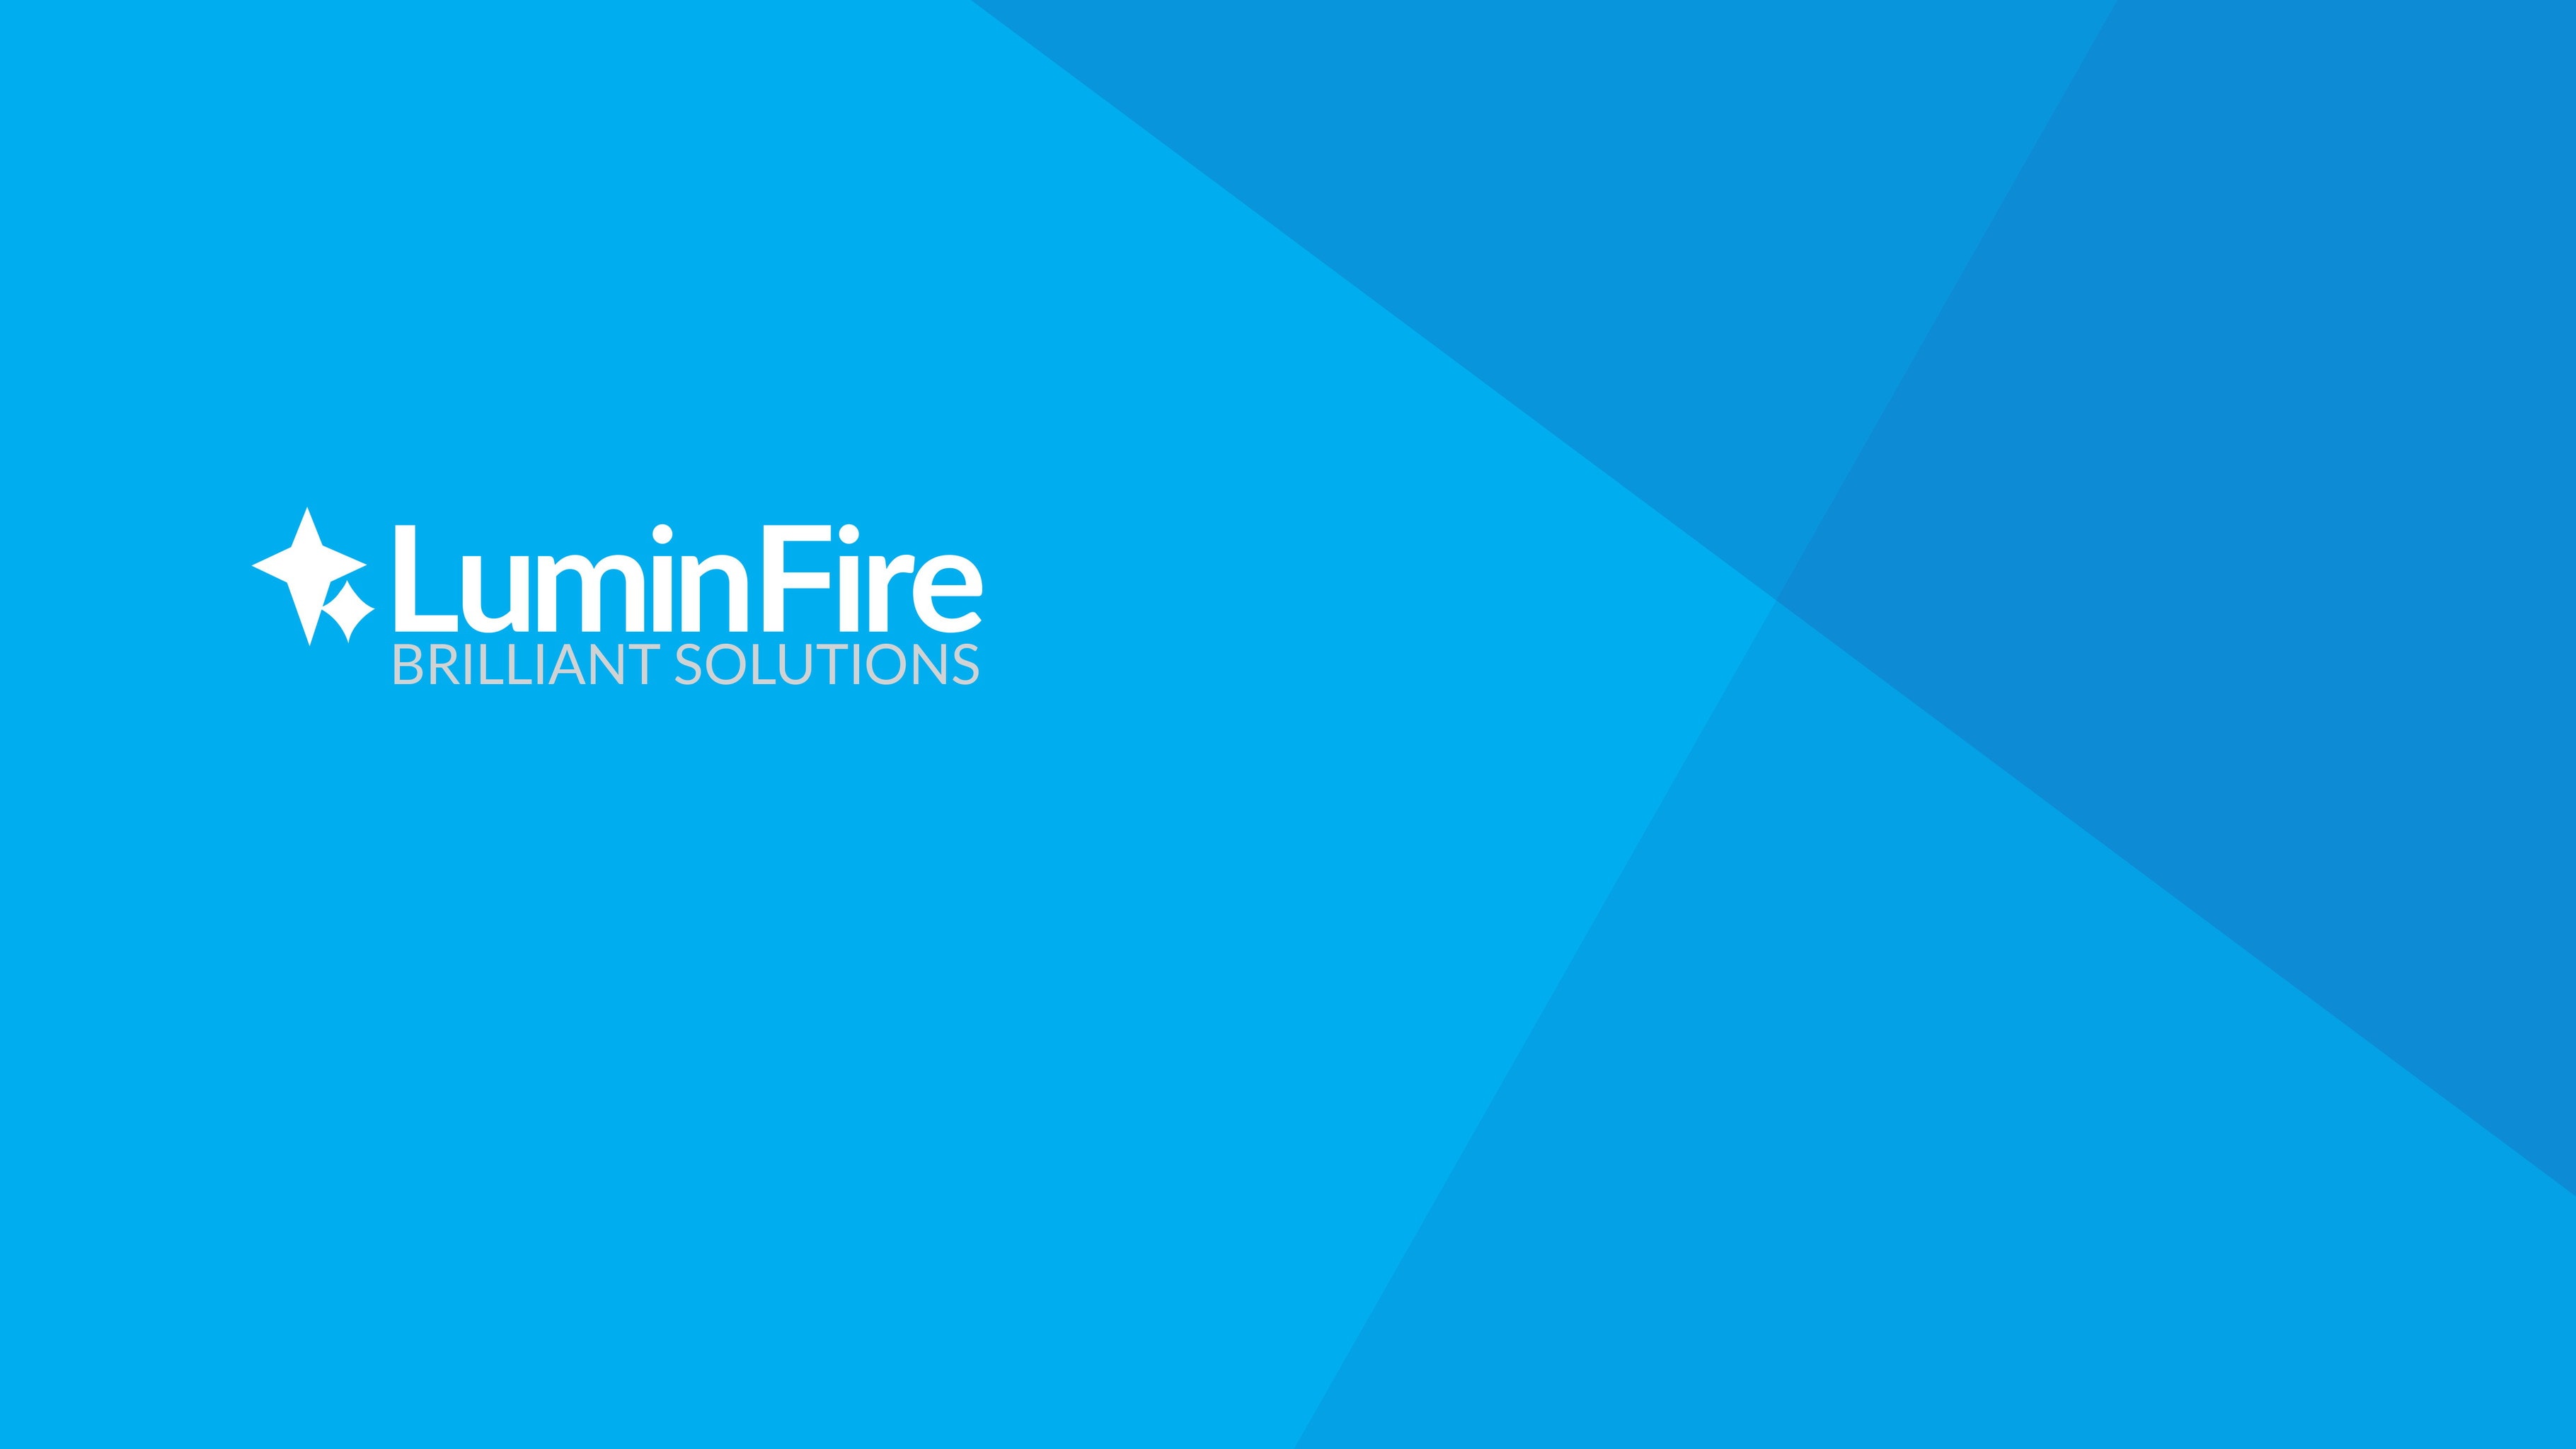 LuminFire Mac OS X Desktop Background Image 1